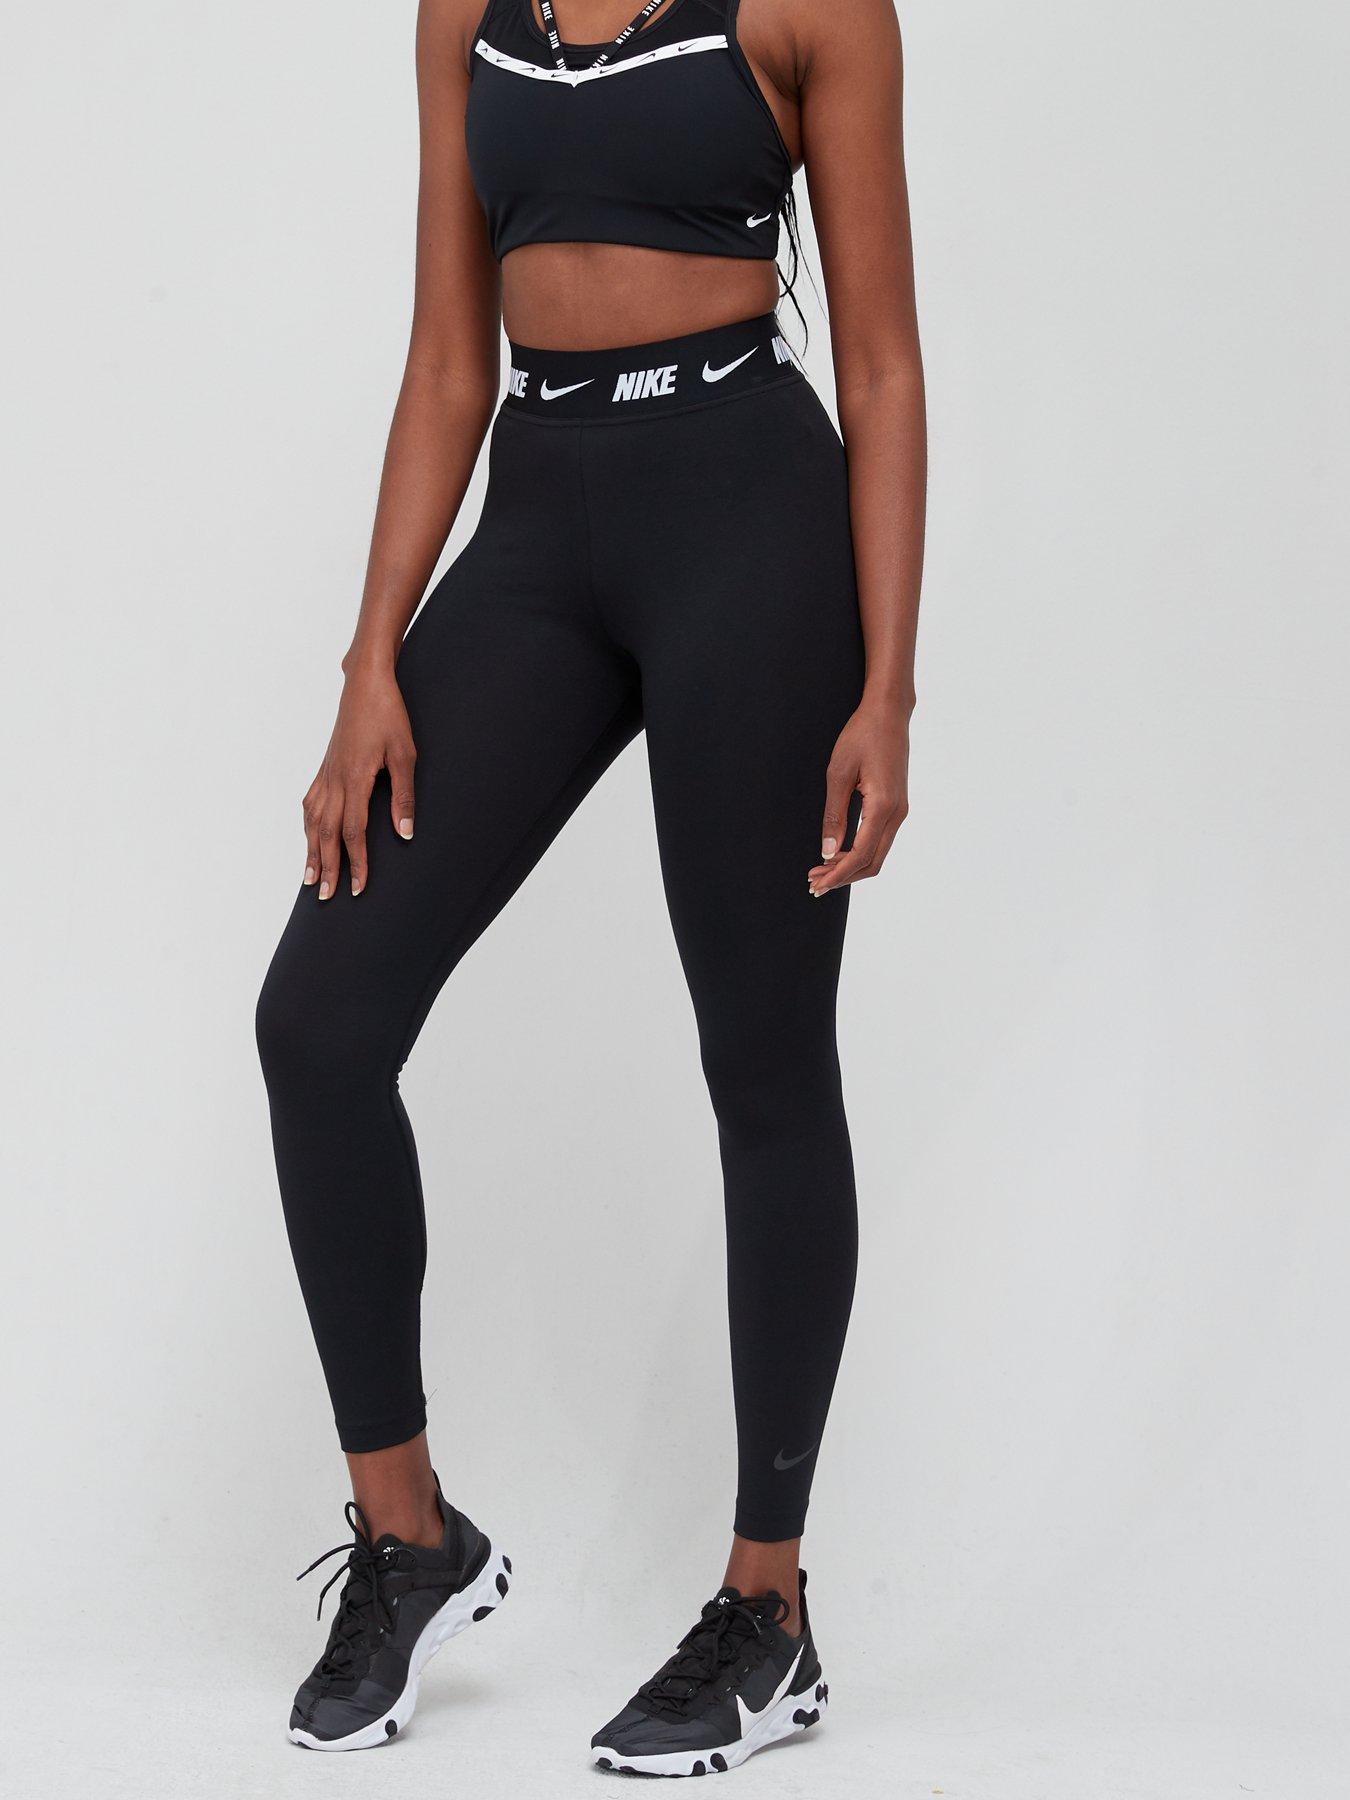 Tight, XL, Tights & leggings, Womens sports clothing, Sports & leisure, Nike